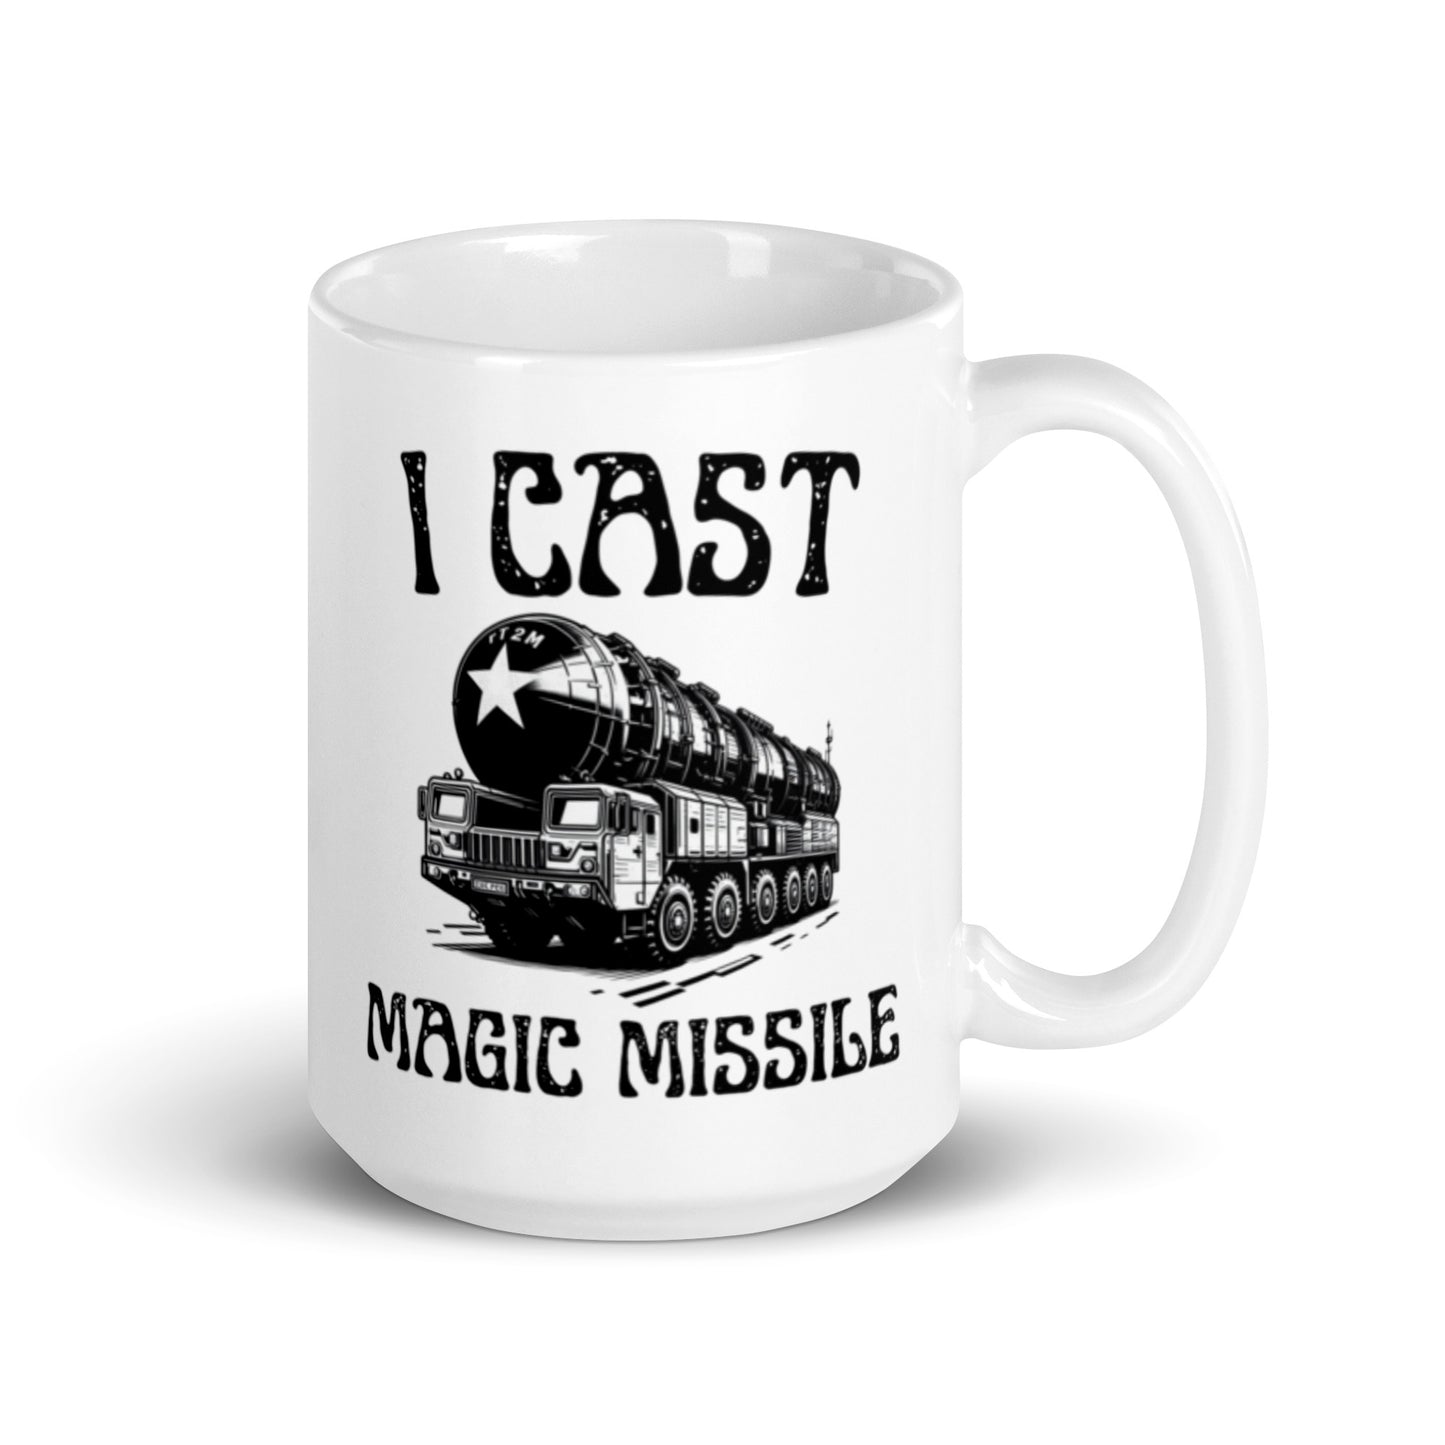 I Cast Magic Missile - ICBM - Mug